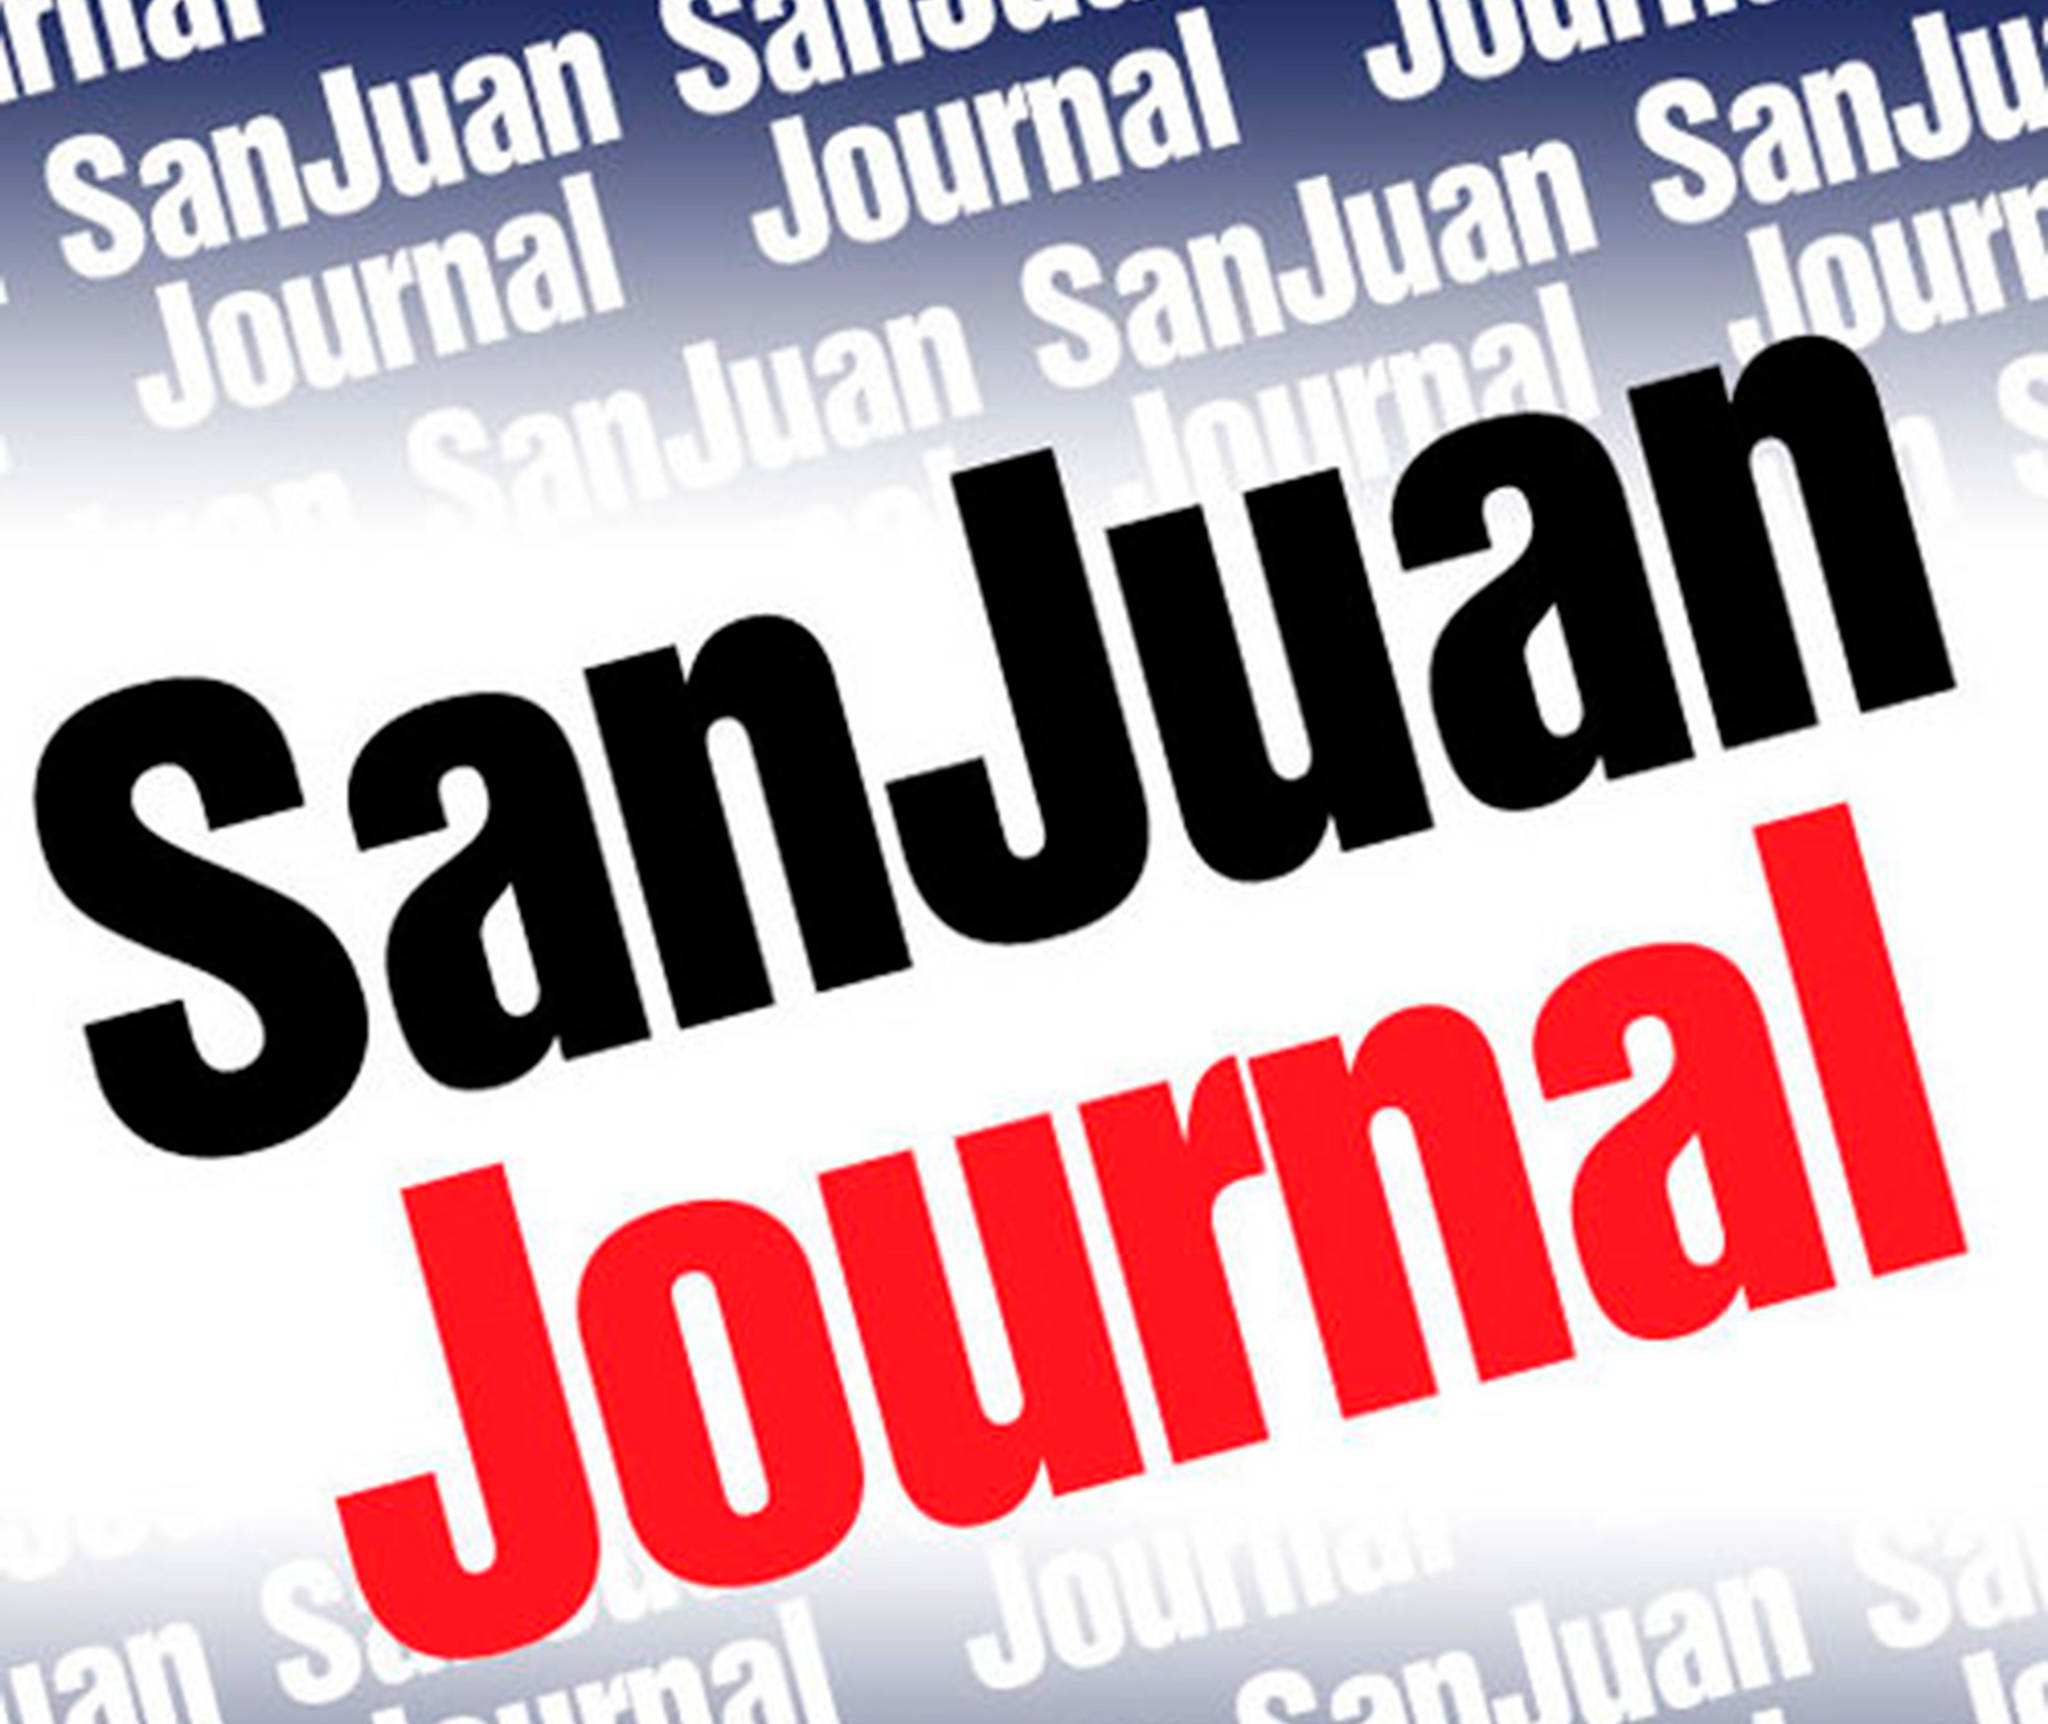 Many ways to savor the San Juans | Editorial